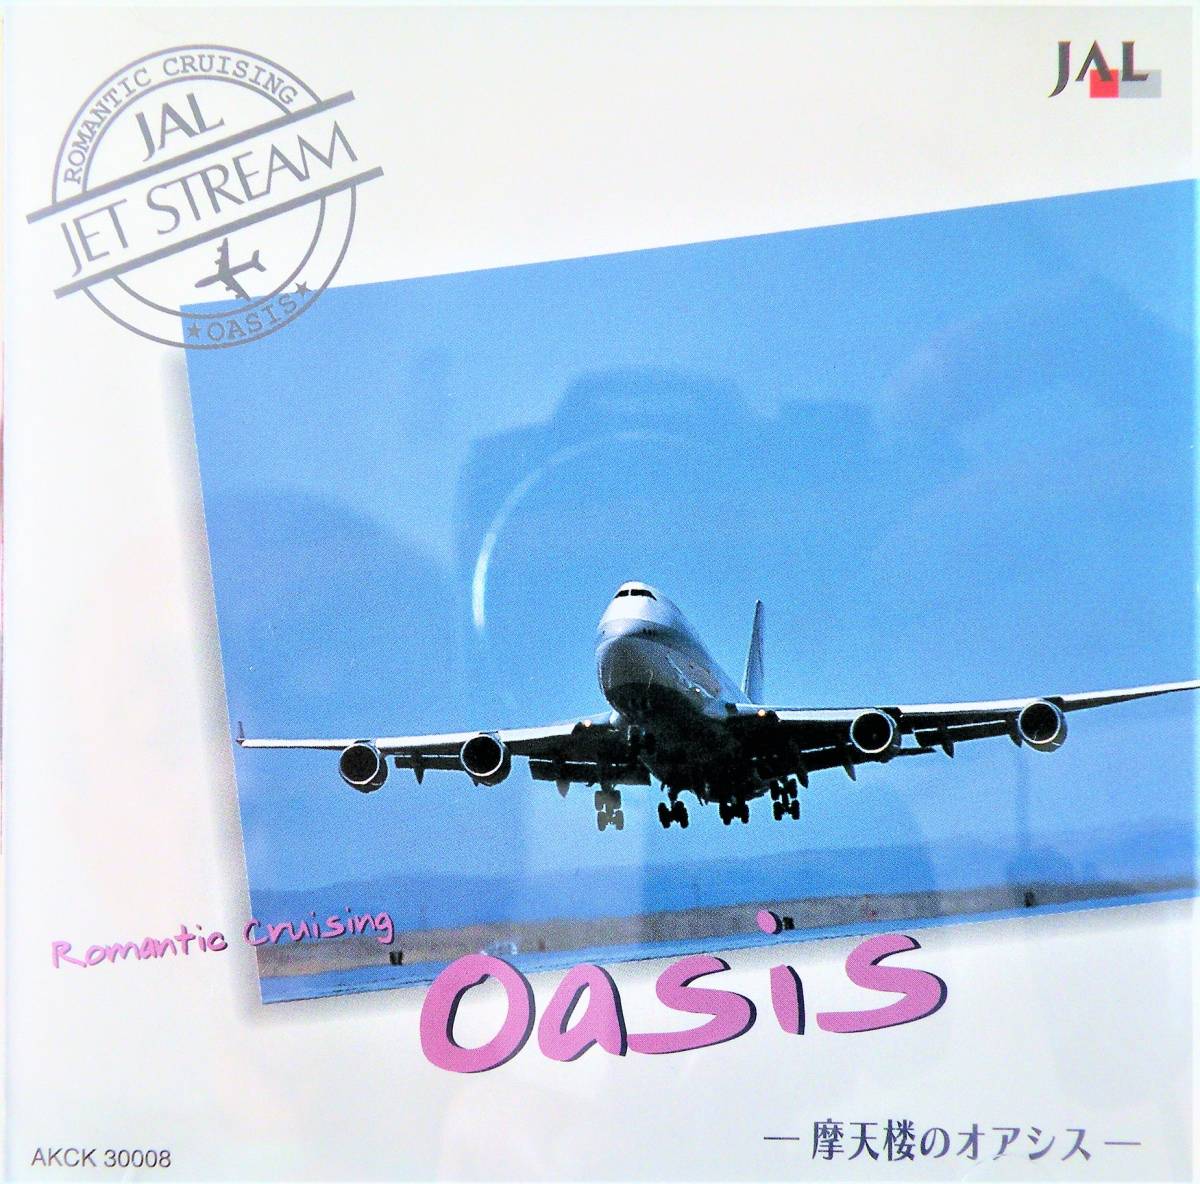 JAL ジェットストリーム Jet Stream Romantic Cruising Memories 